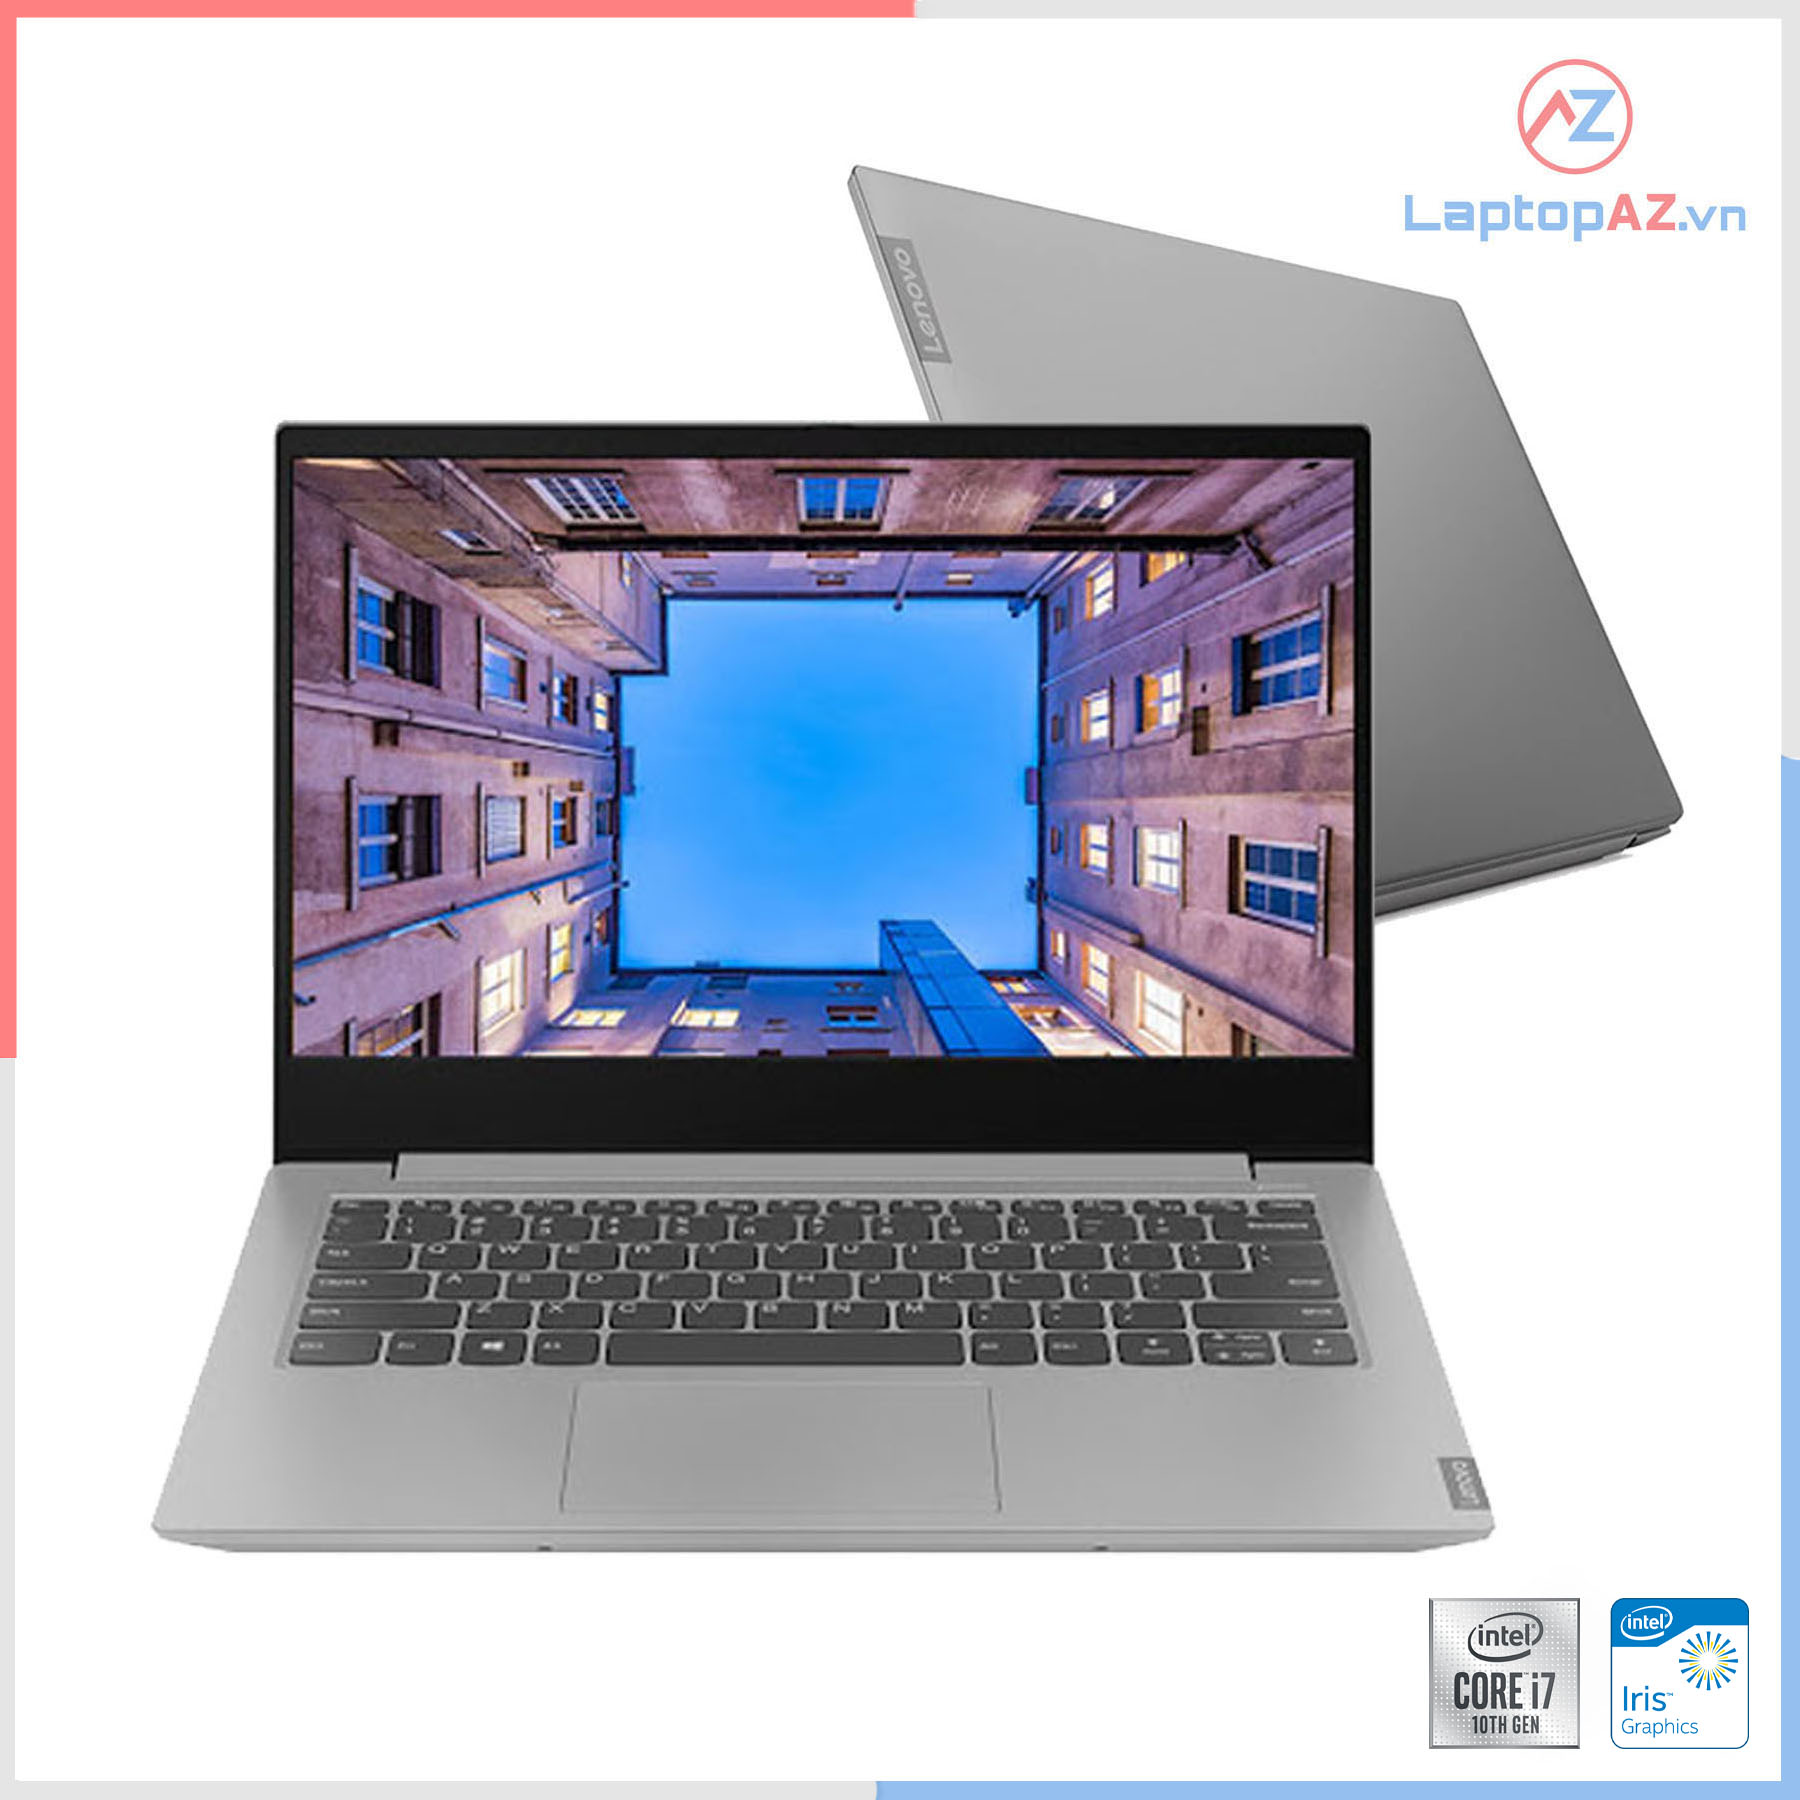 Laptop Lenovo IdeaPad S340 15IIL (81VW007AVN) Intel Core i7 1065G7, 8GB, 512GB, 15.6 inch FHD